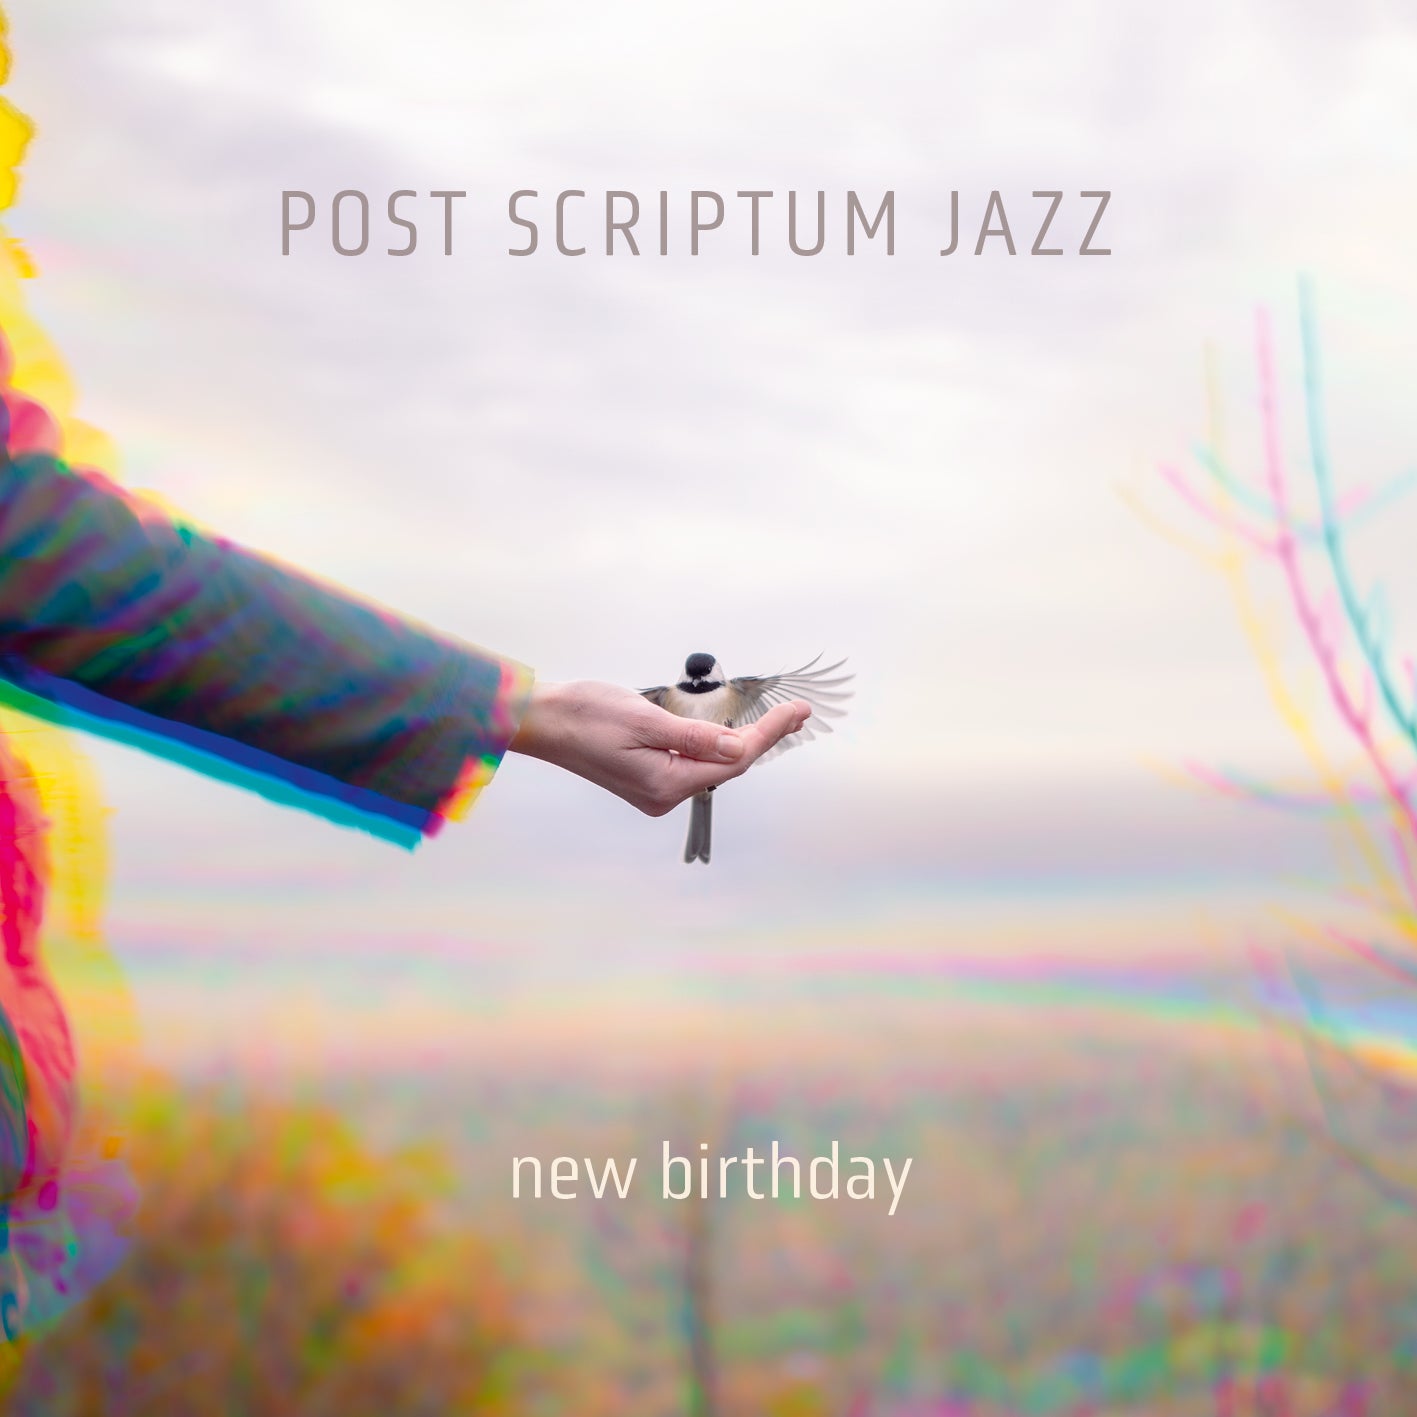 Post Scriptum Jazz - new birthday